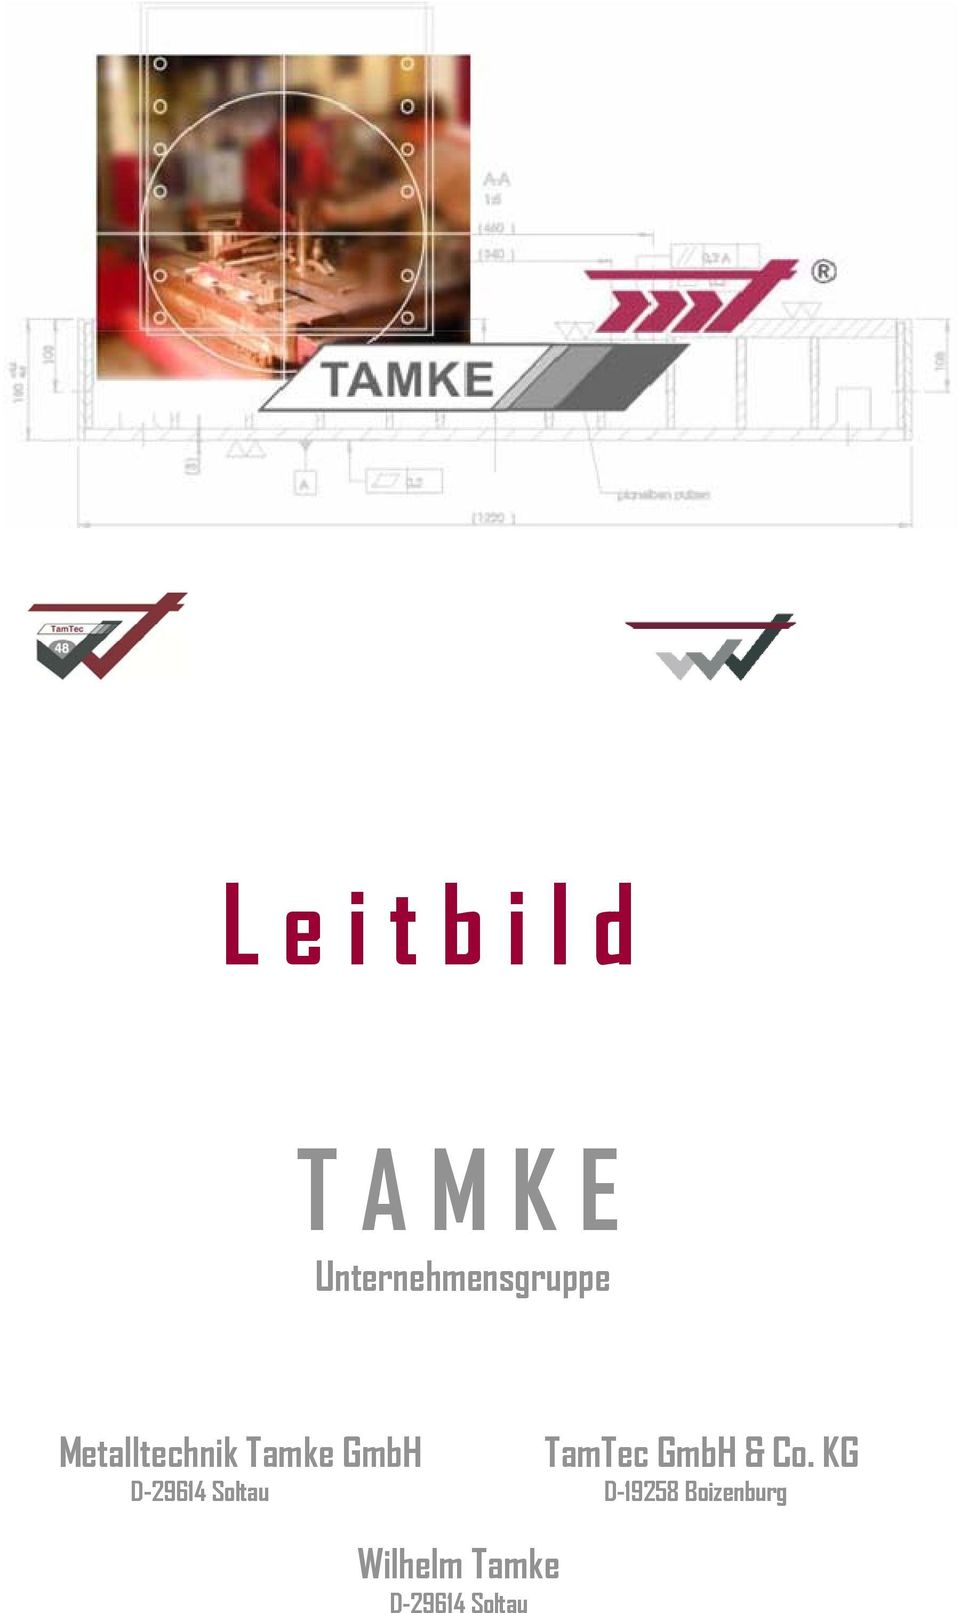 GmbH TamTec GmbH & Co.